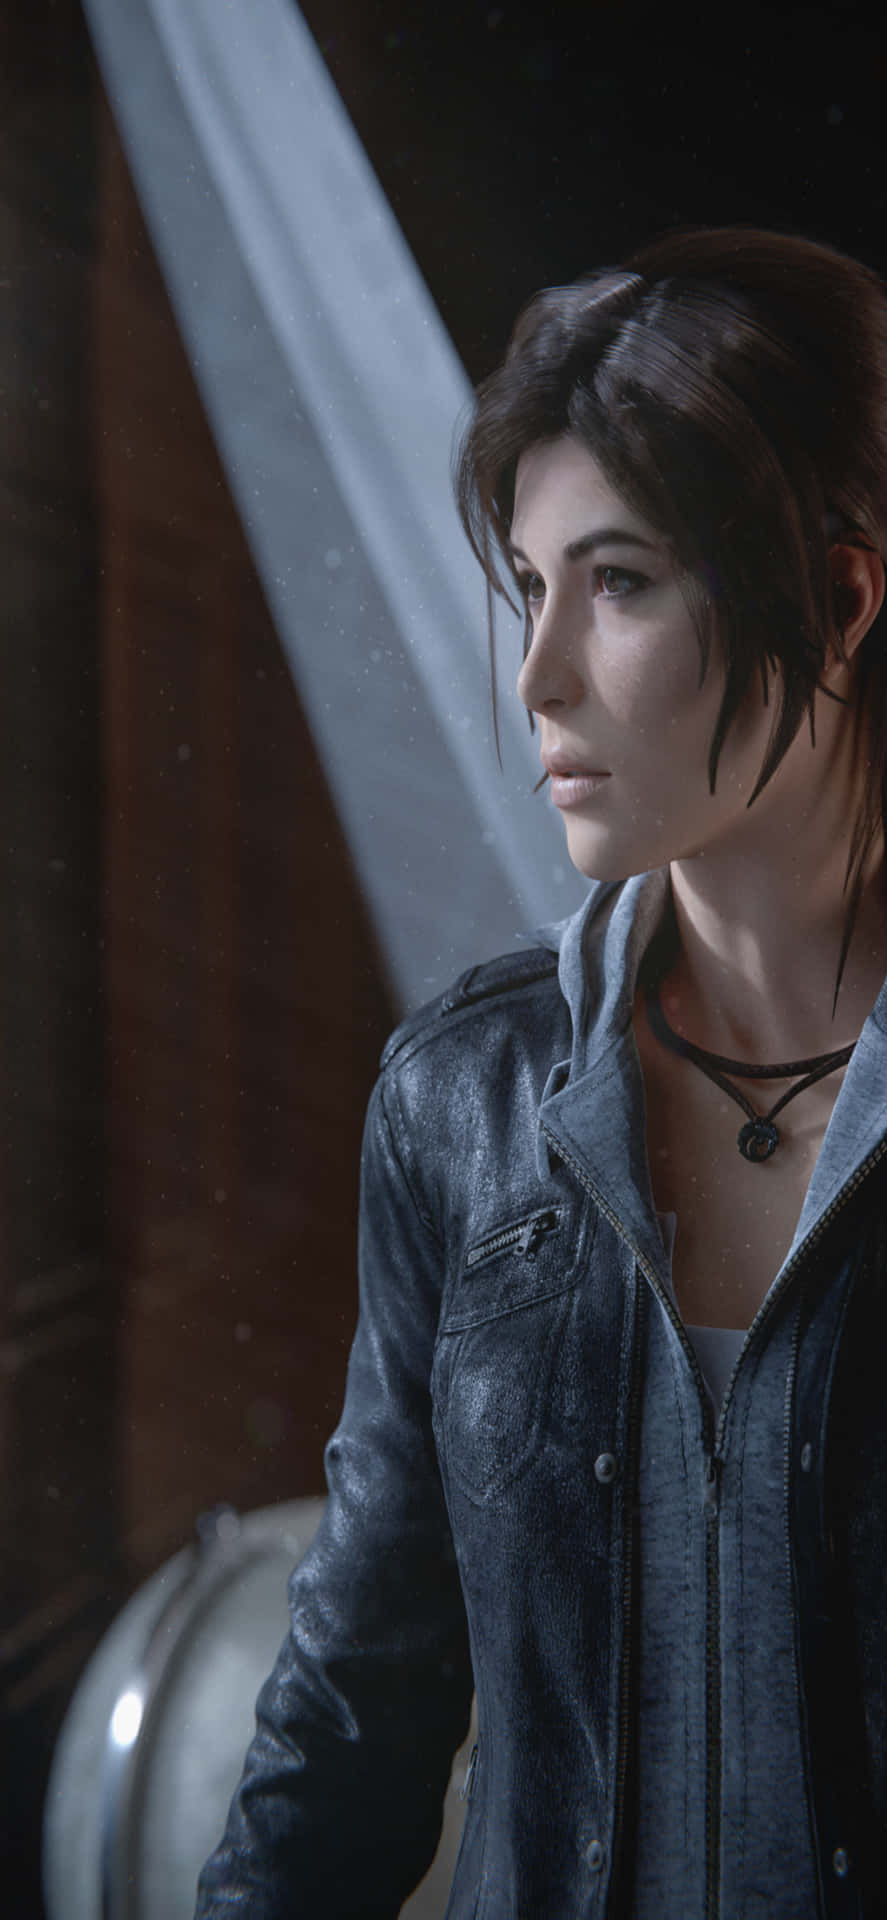 Imagendel Personaje De Rise Of The Tomb Raider Para Iphone Xs Max